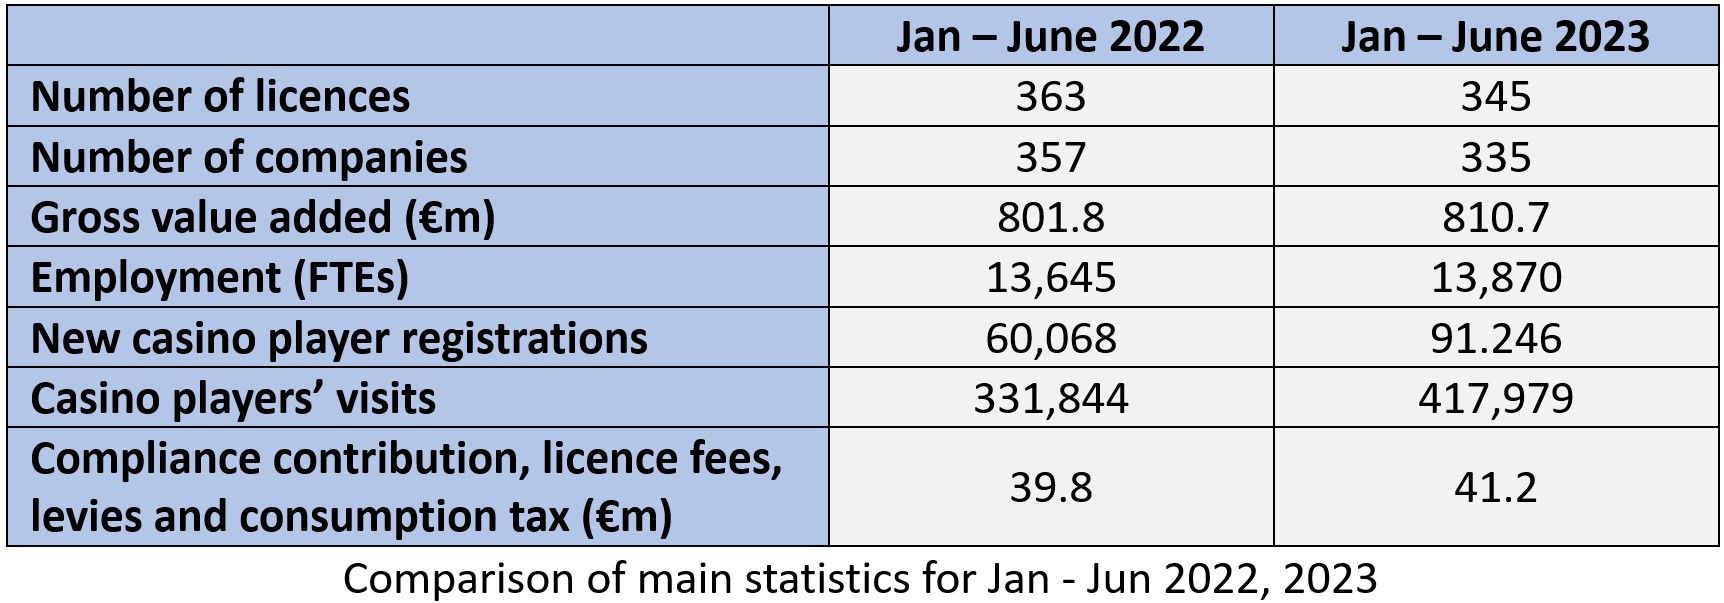 Comparison of main statistics for Jan - Jun 2022 and 2023